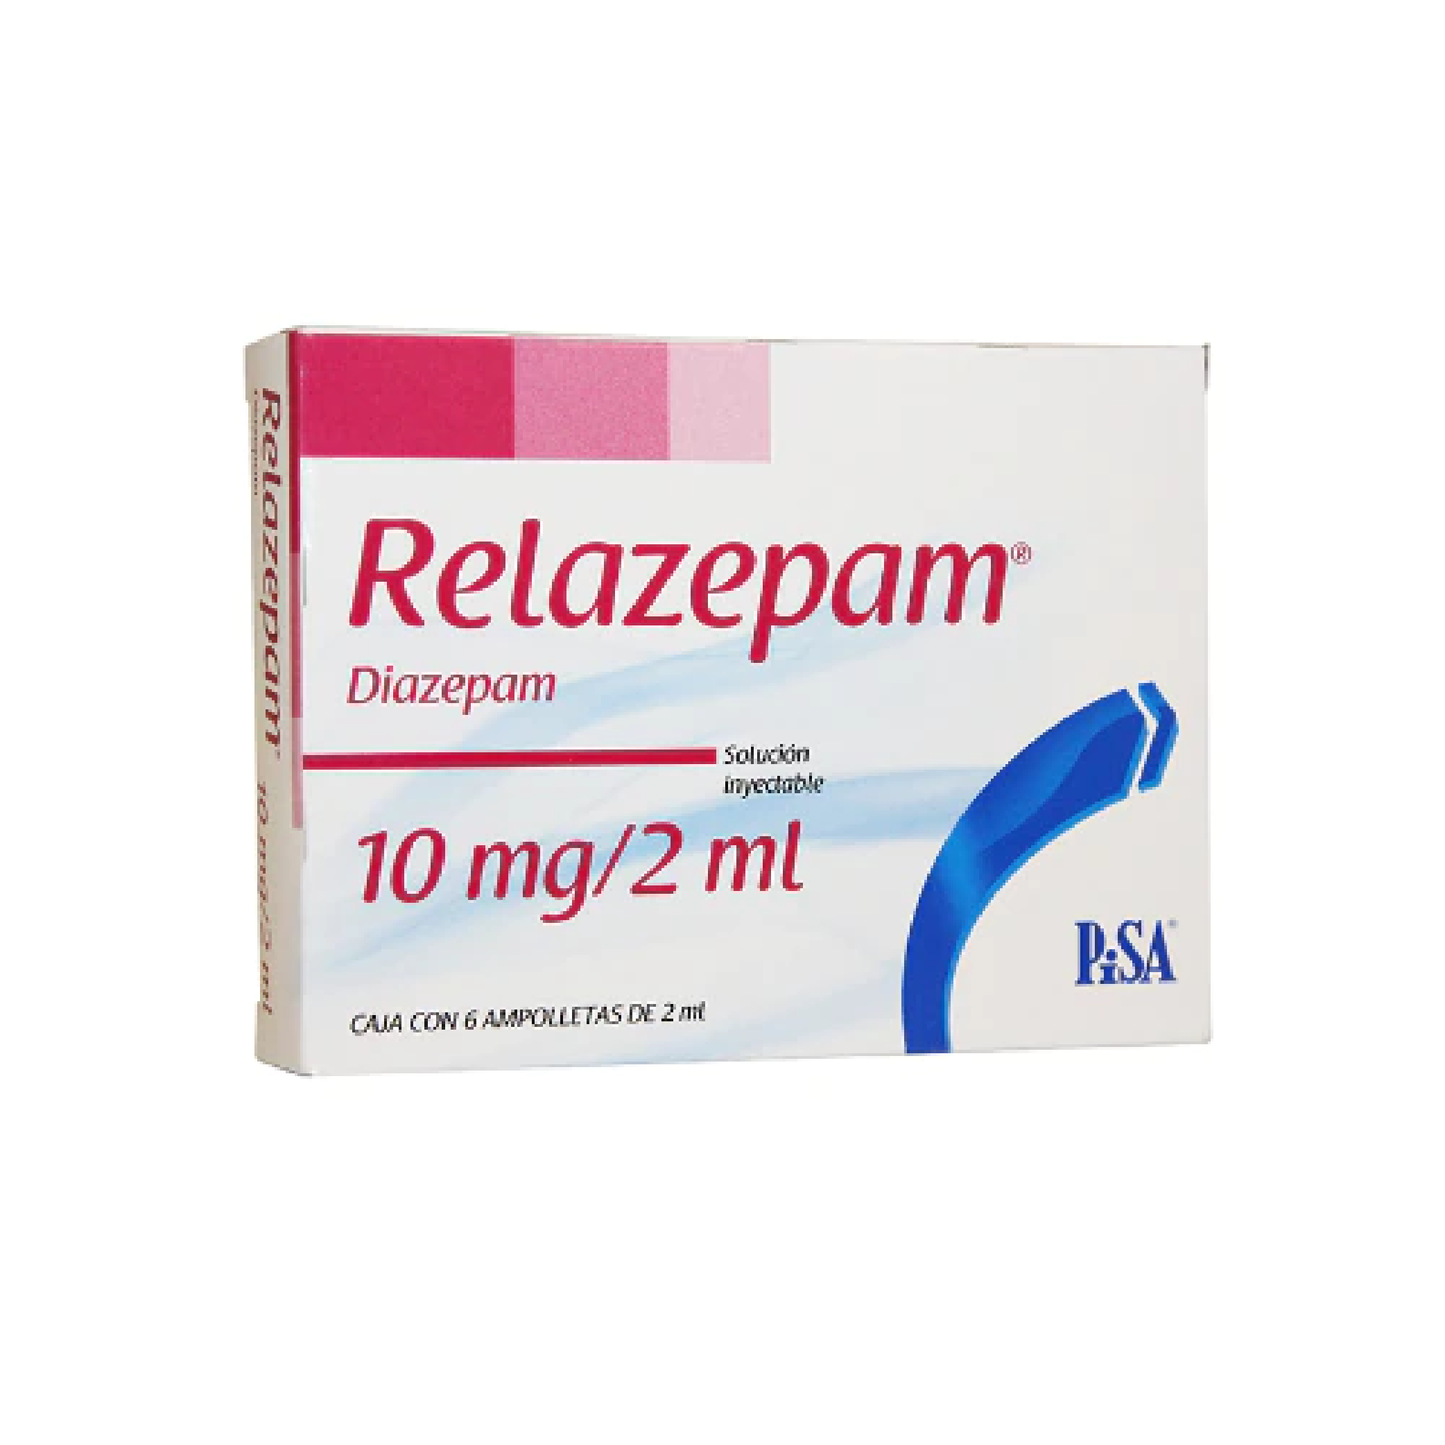 Relazepam (Diazepam) Sol iny 10mg/2ml Cja c/6 amps